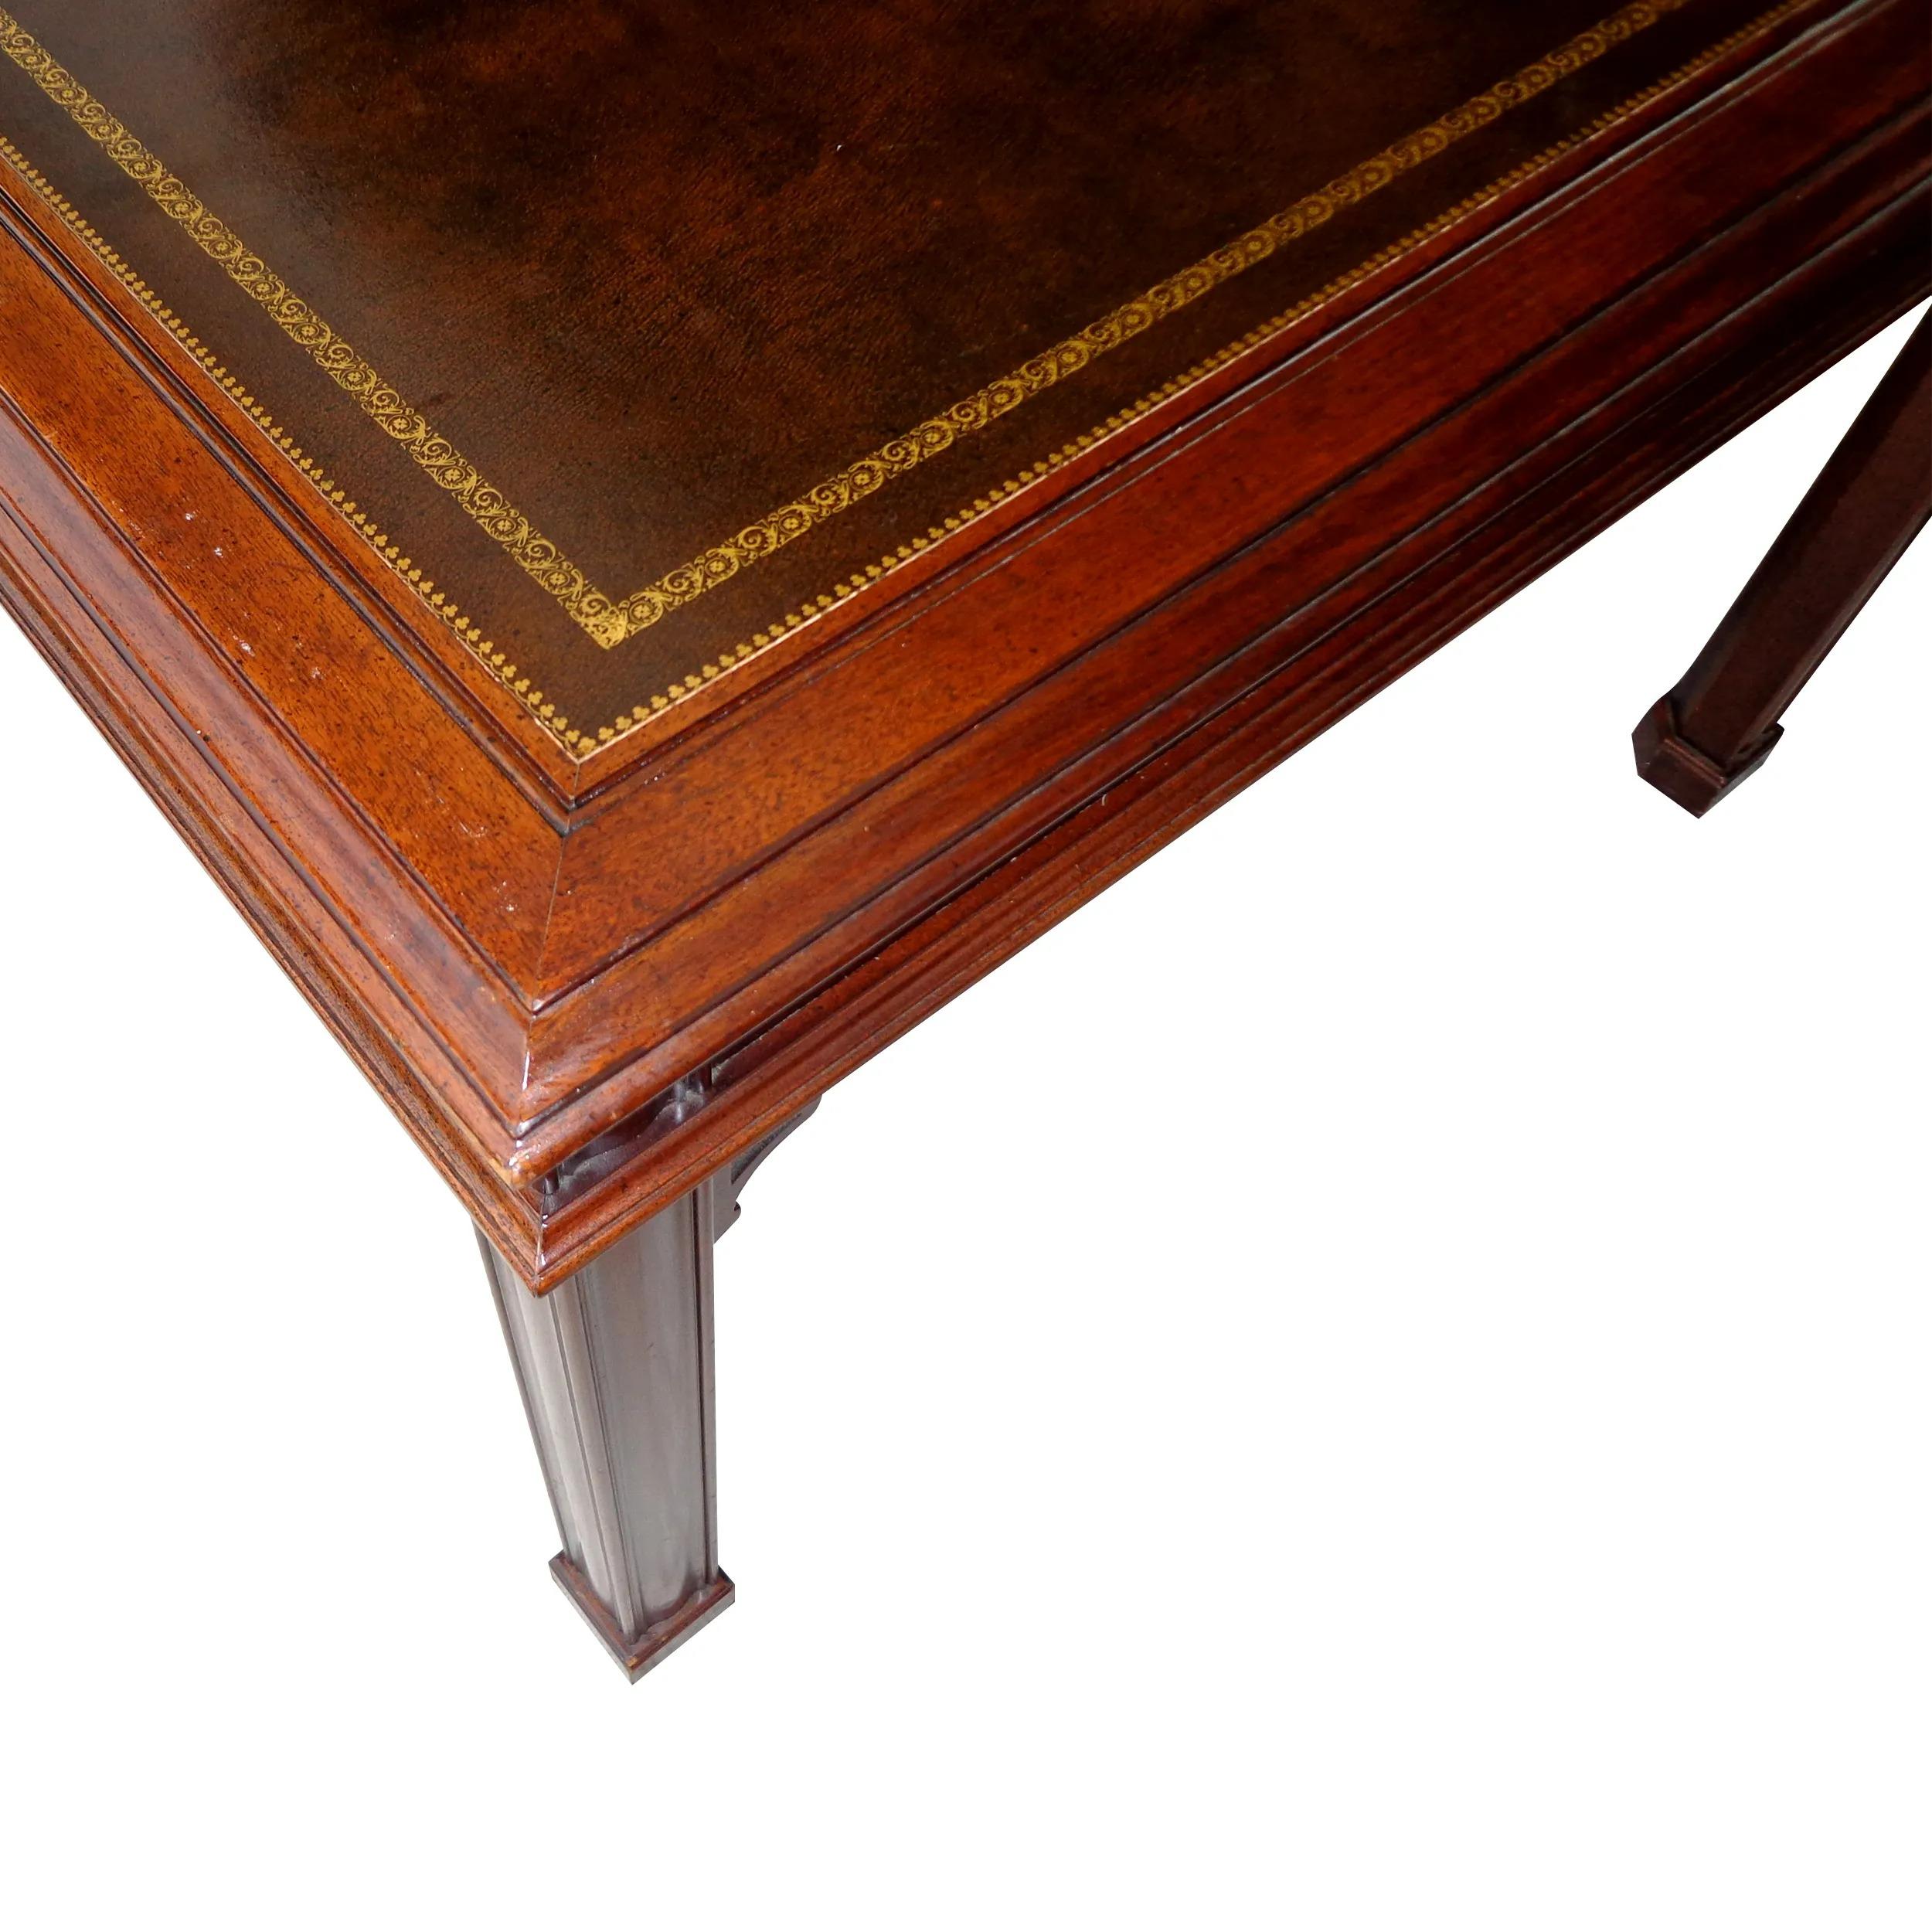 Mahogany 7' Banded Chippendale Regency Sligh Furniture Writing Desk